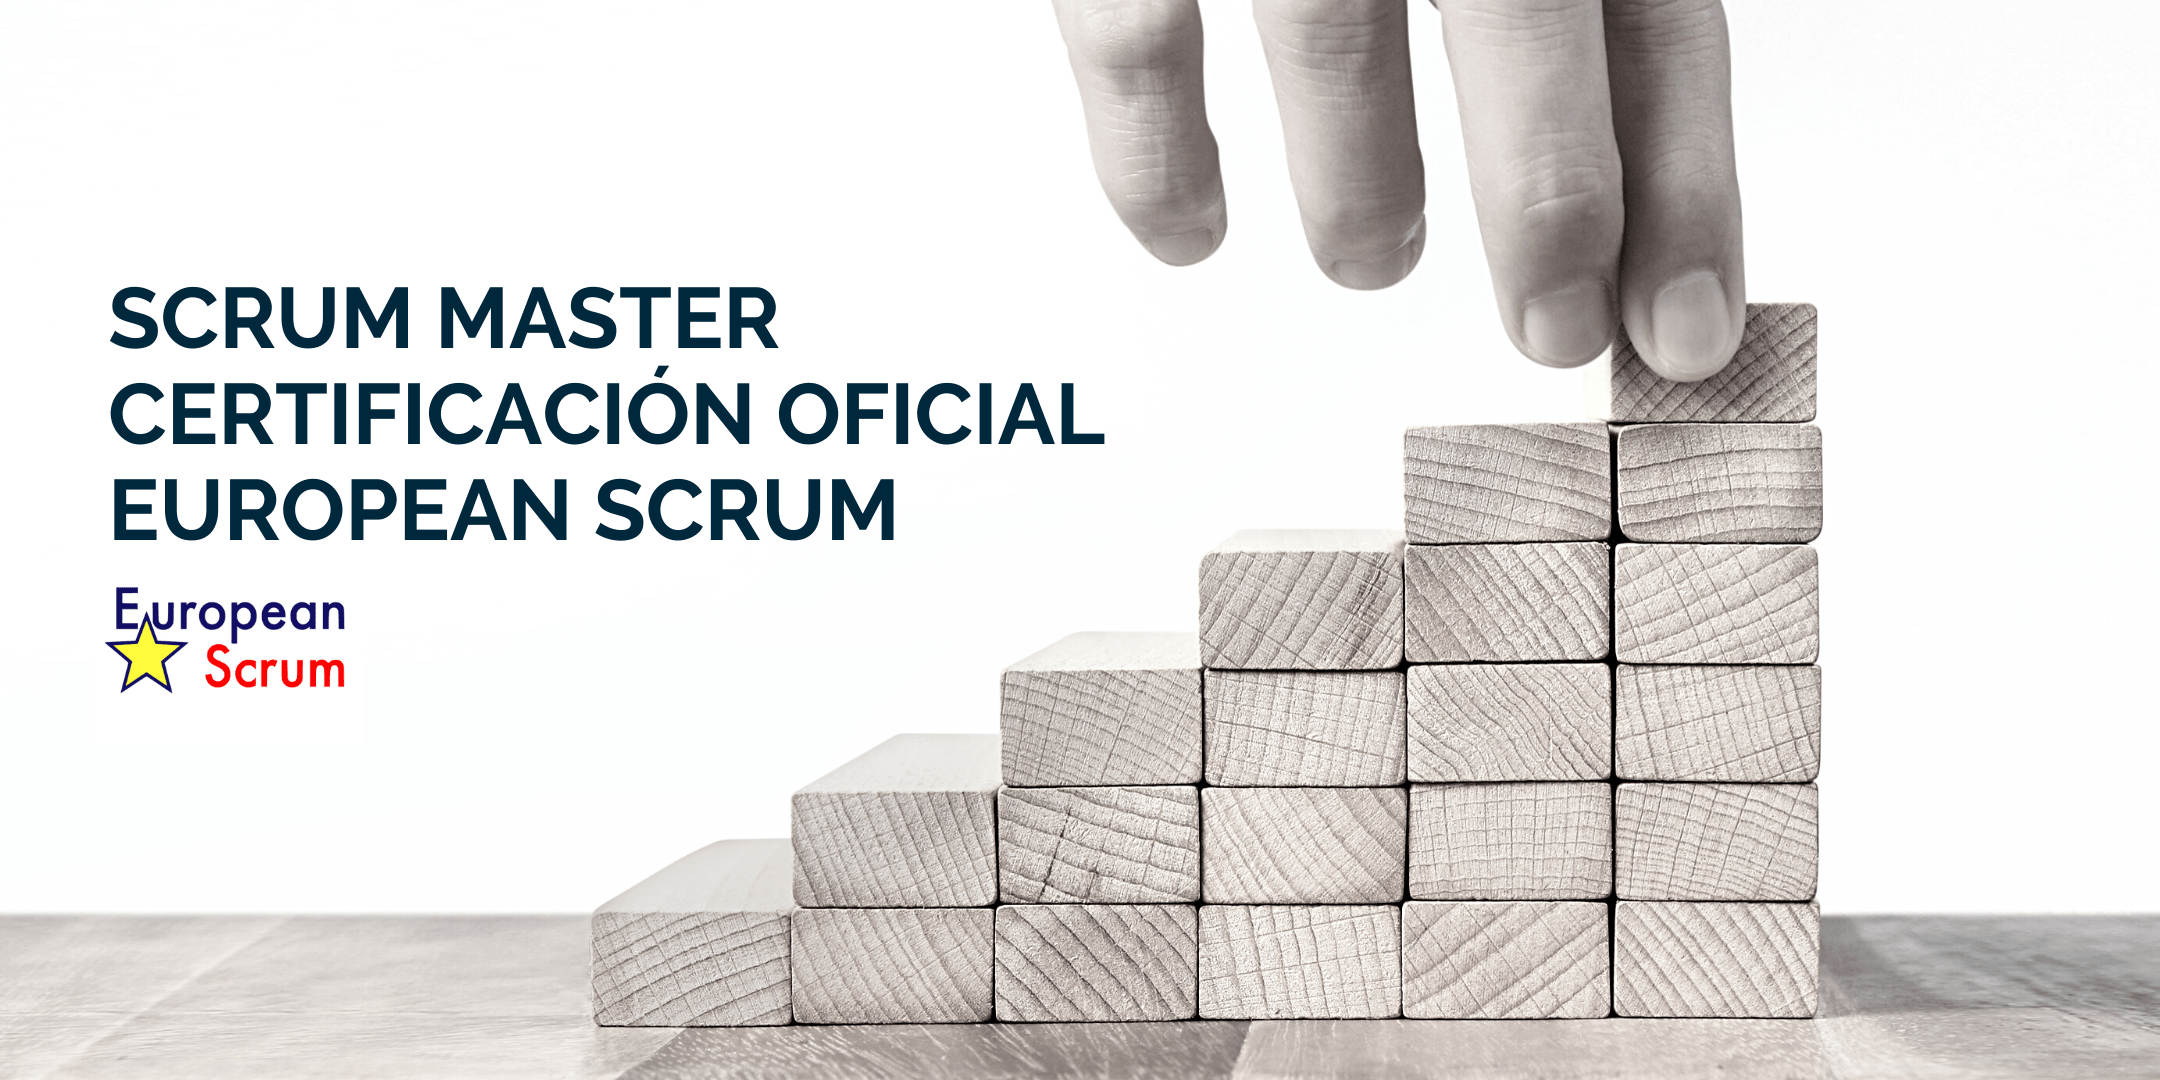 Copia de Scrum Master Certificación Oficial European Scrum 2